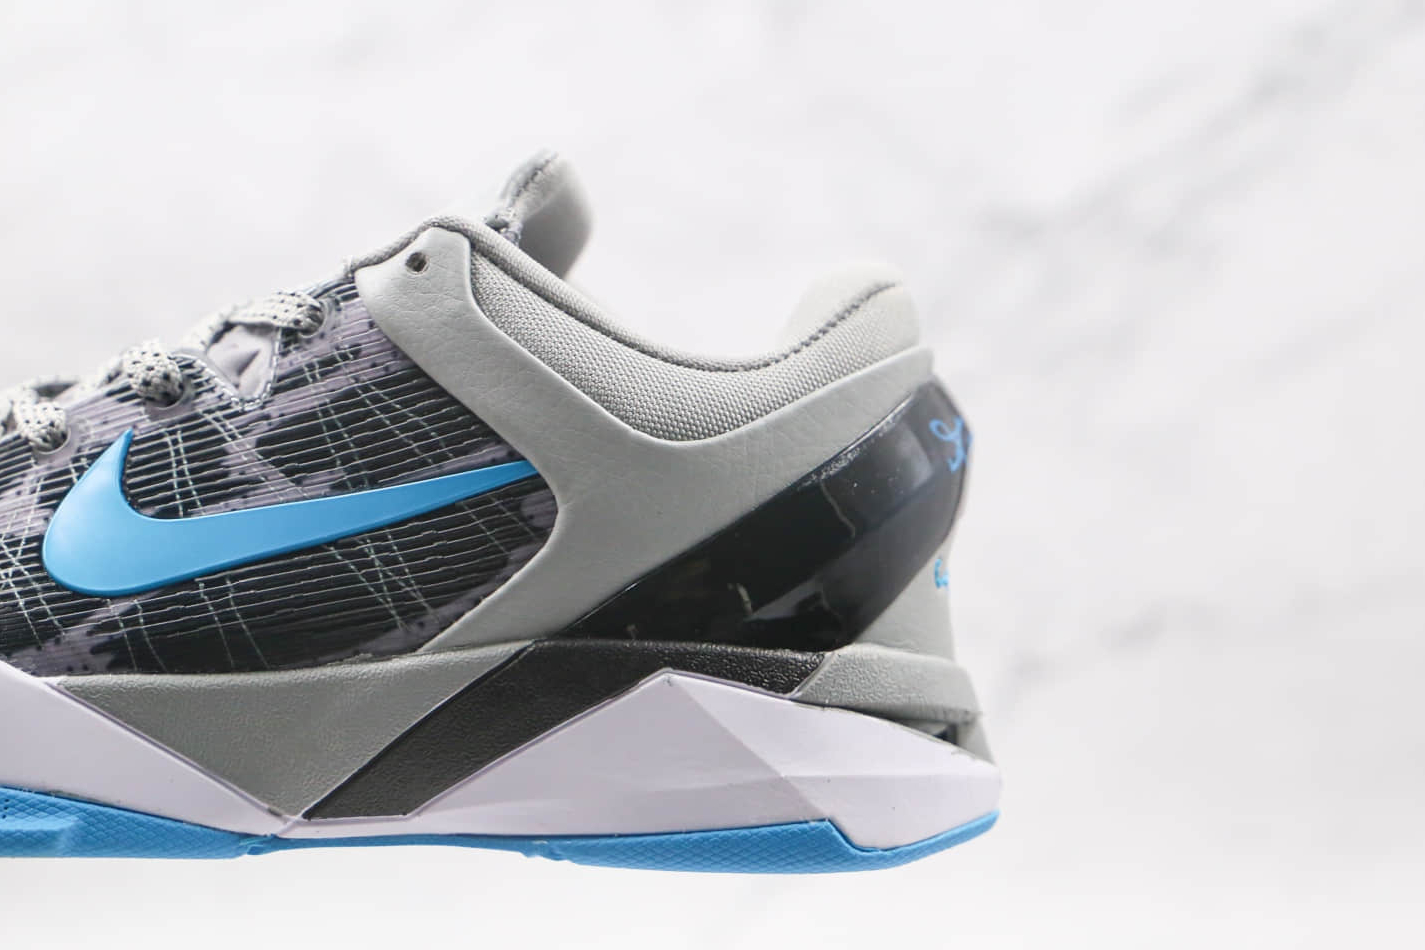 Nike Zoom Kobe VII System 488370-002 - High-Performance Basketball Shoes